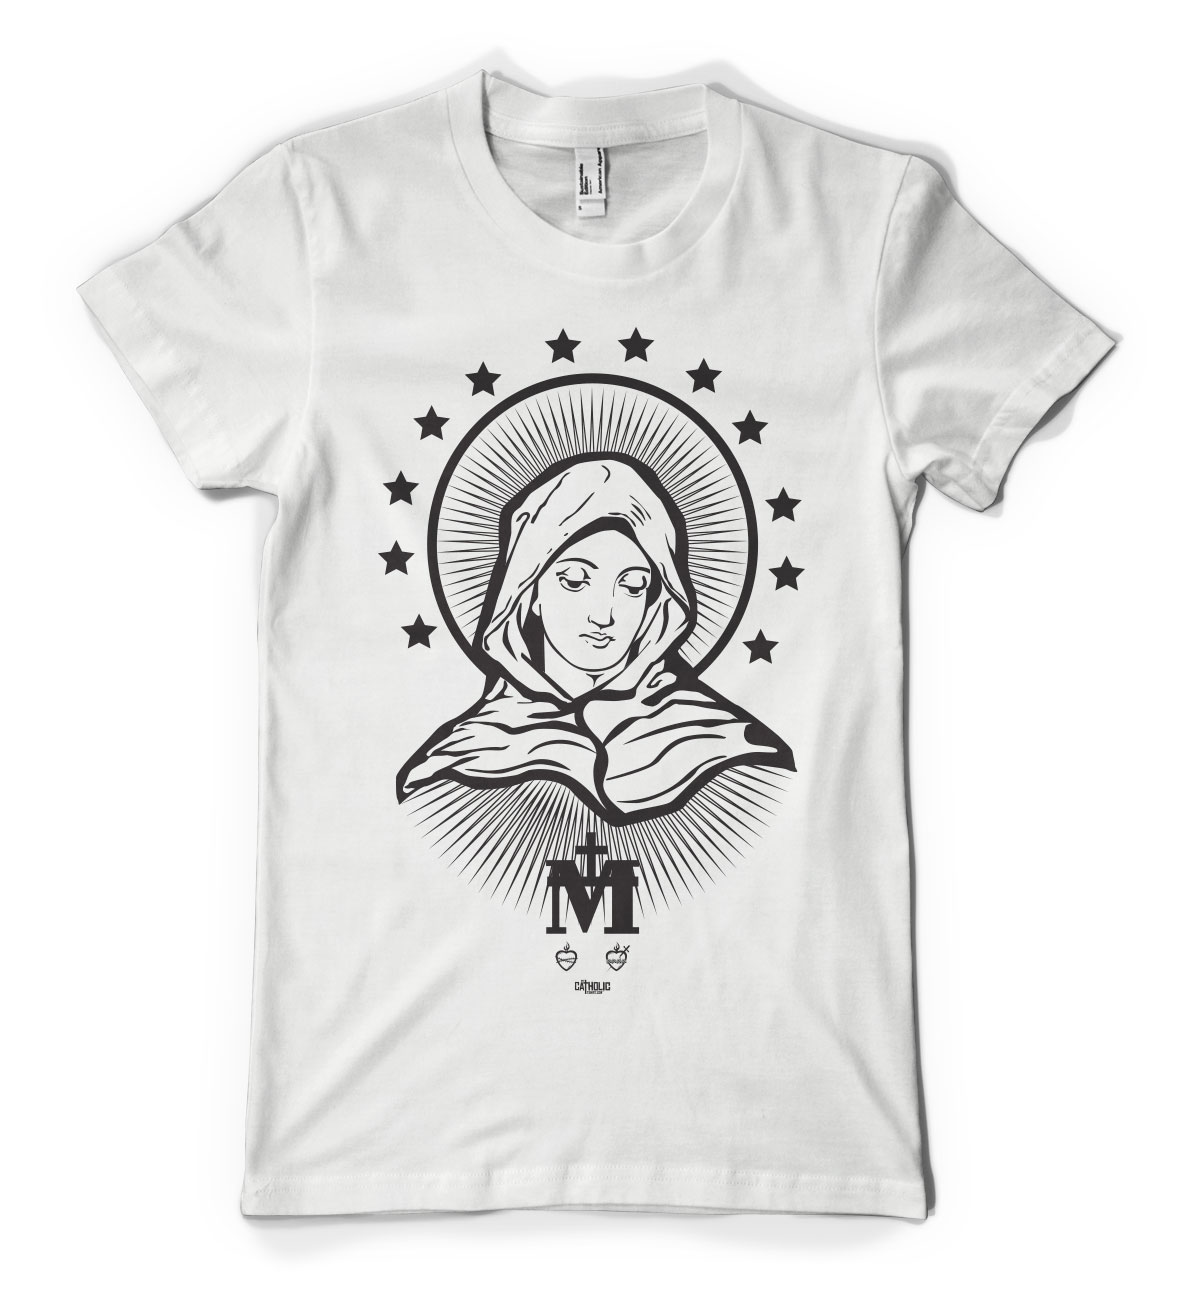 Blessed Virgin Mary Tshirt - My Catholic Tshirt - Catholic T-shirts